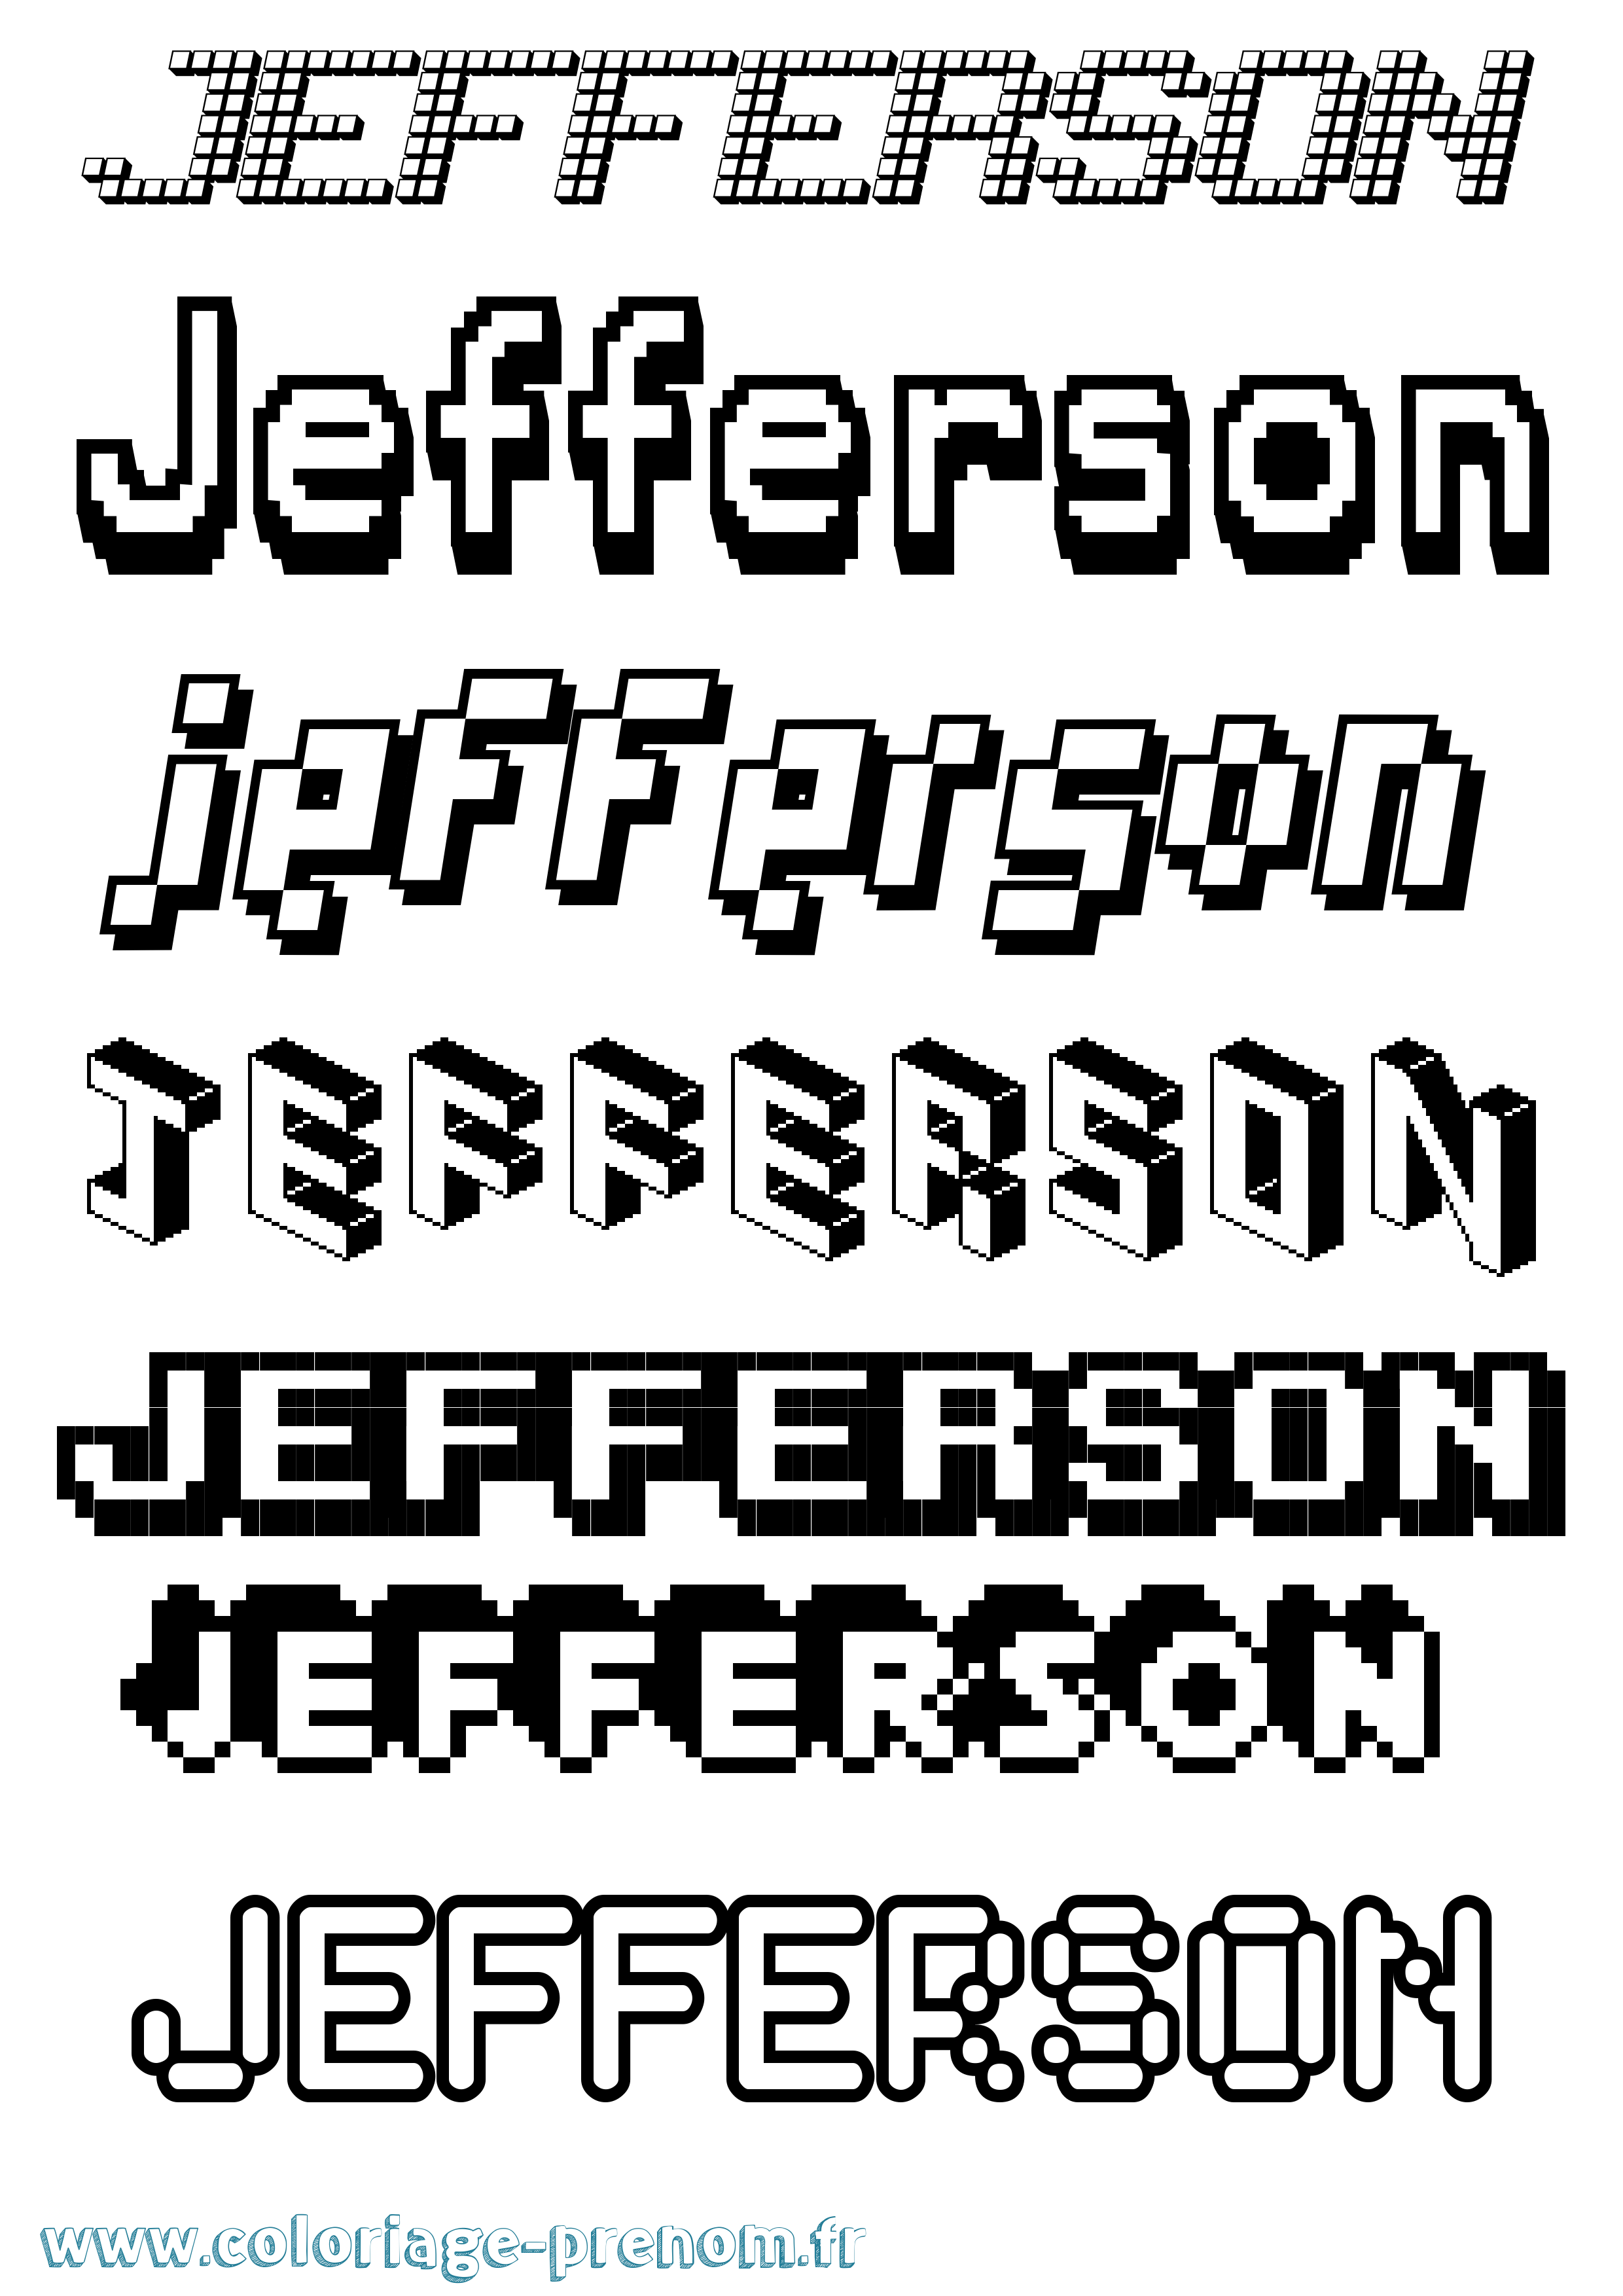 Coloriage prénom Jefferson Pixel